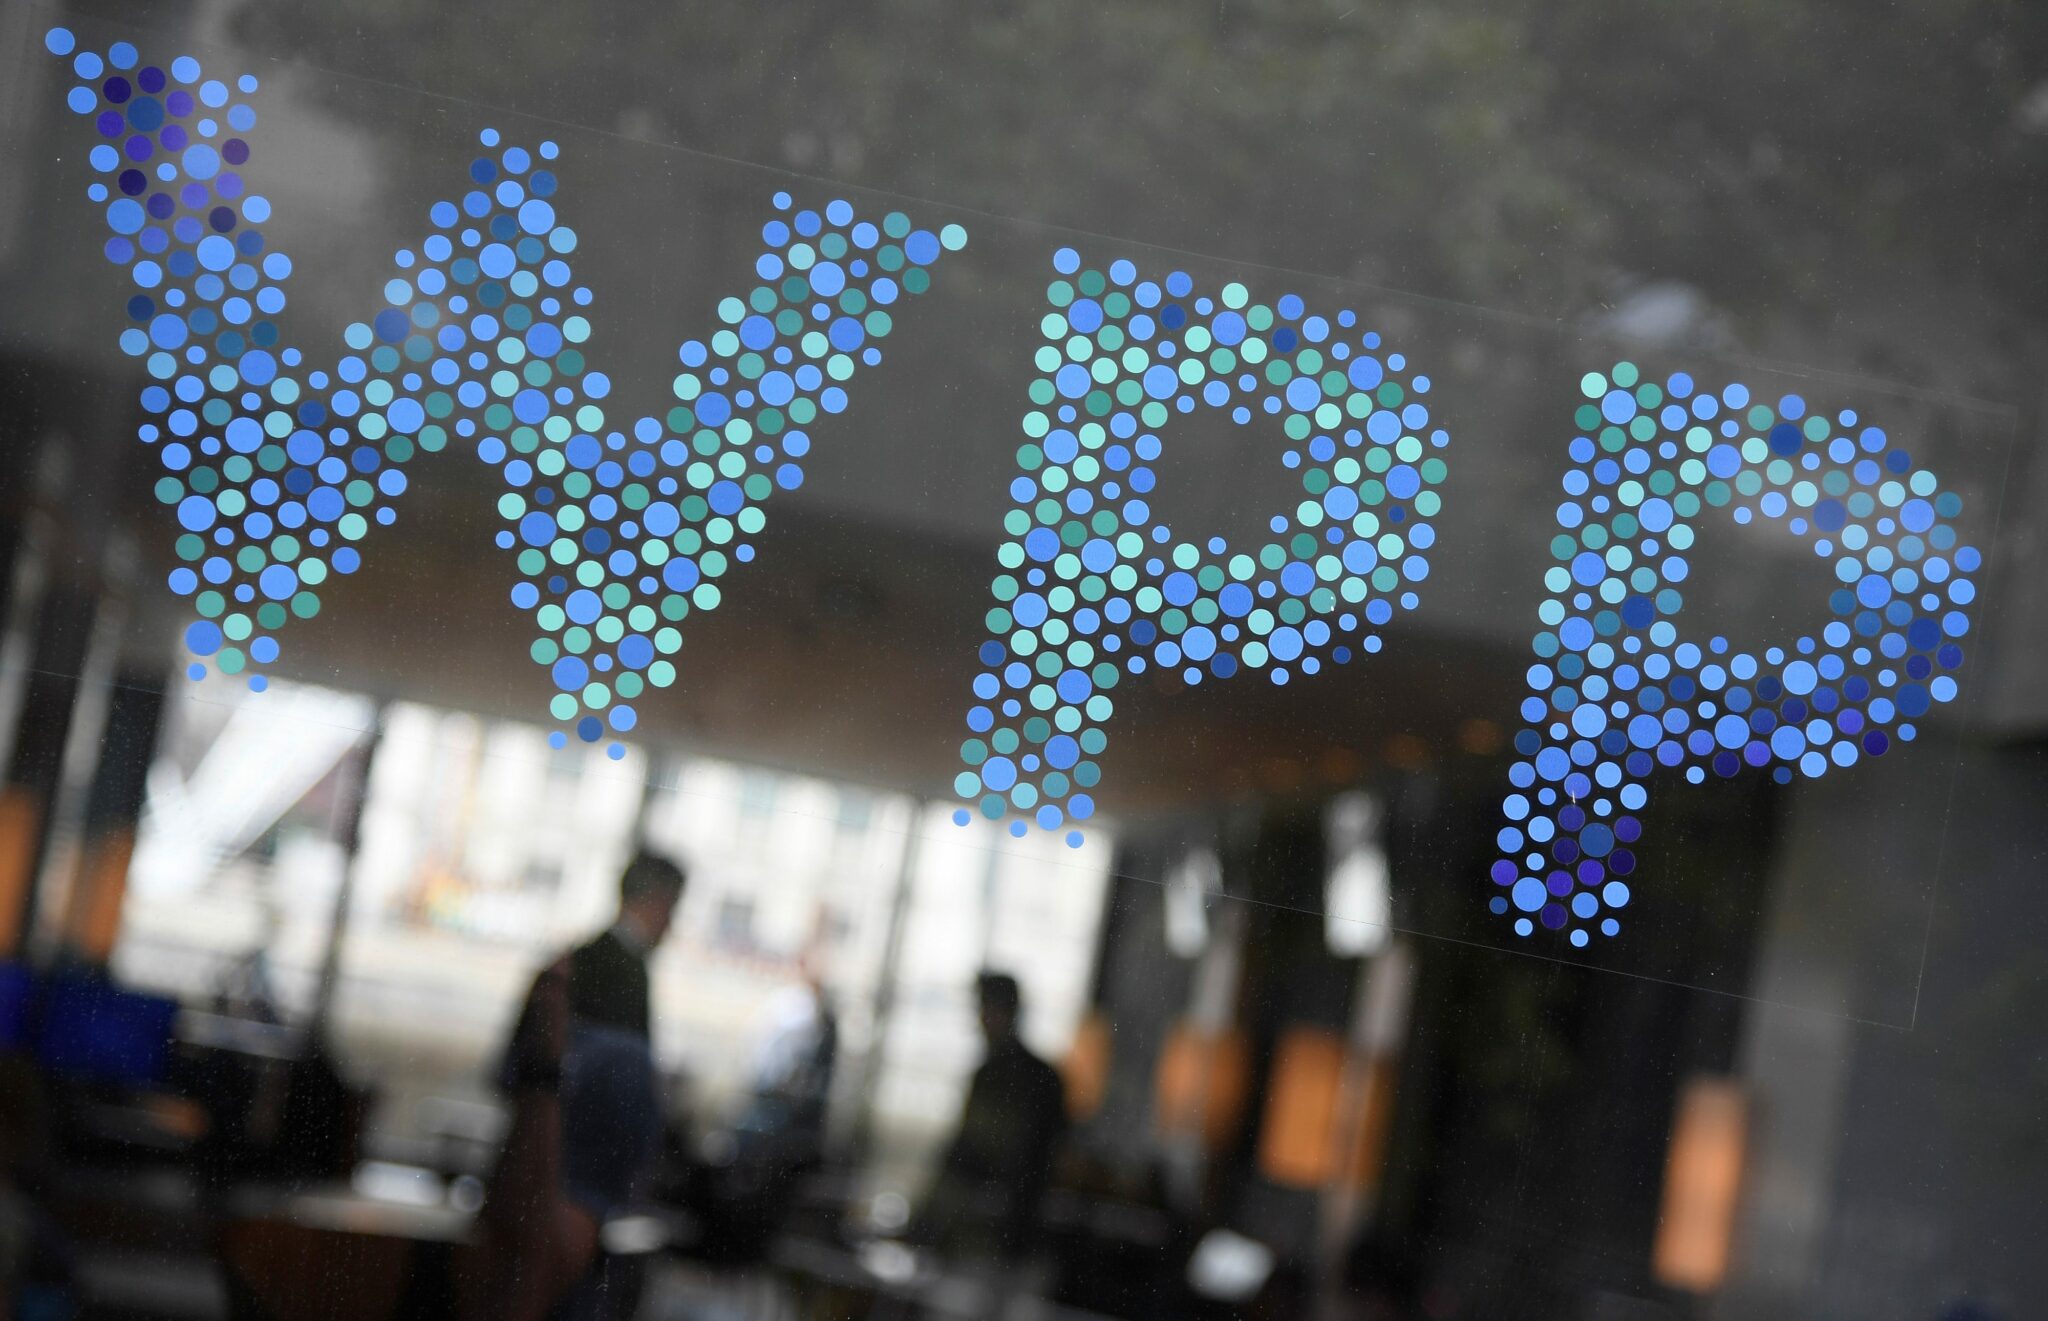 WPP – London, $16.9 billion